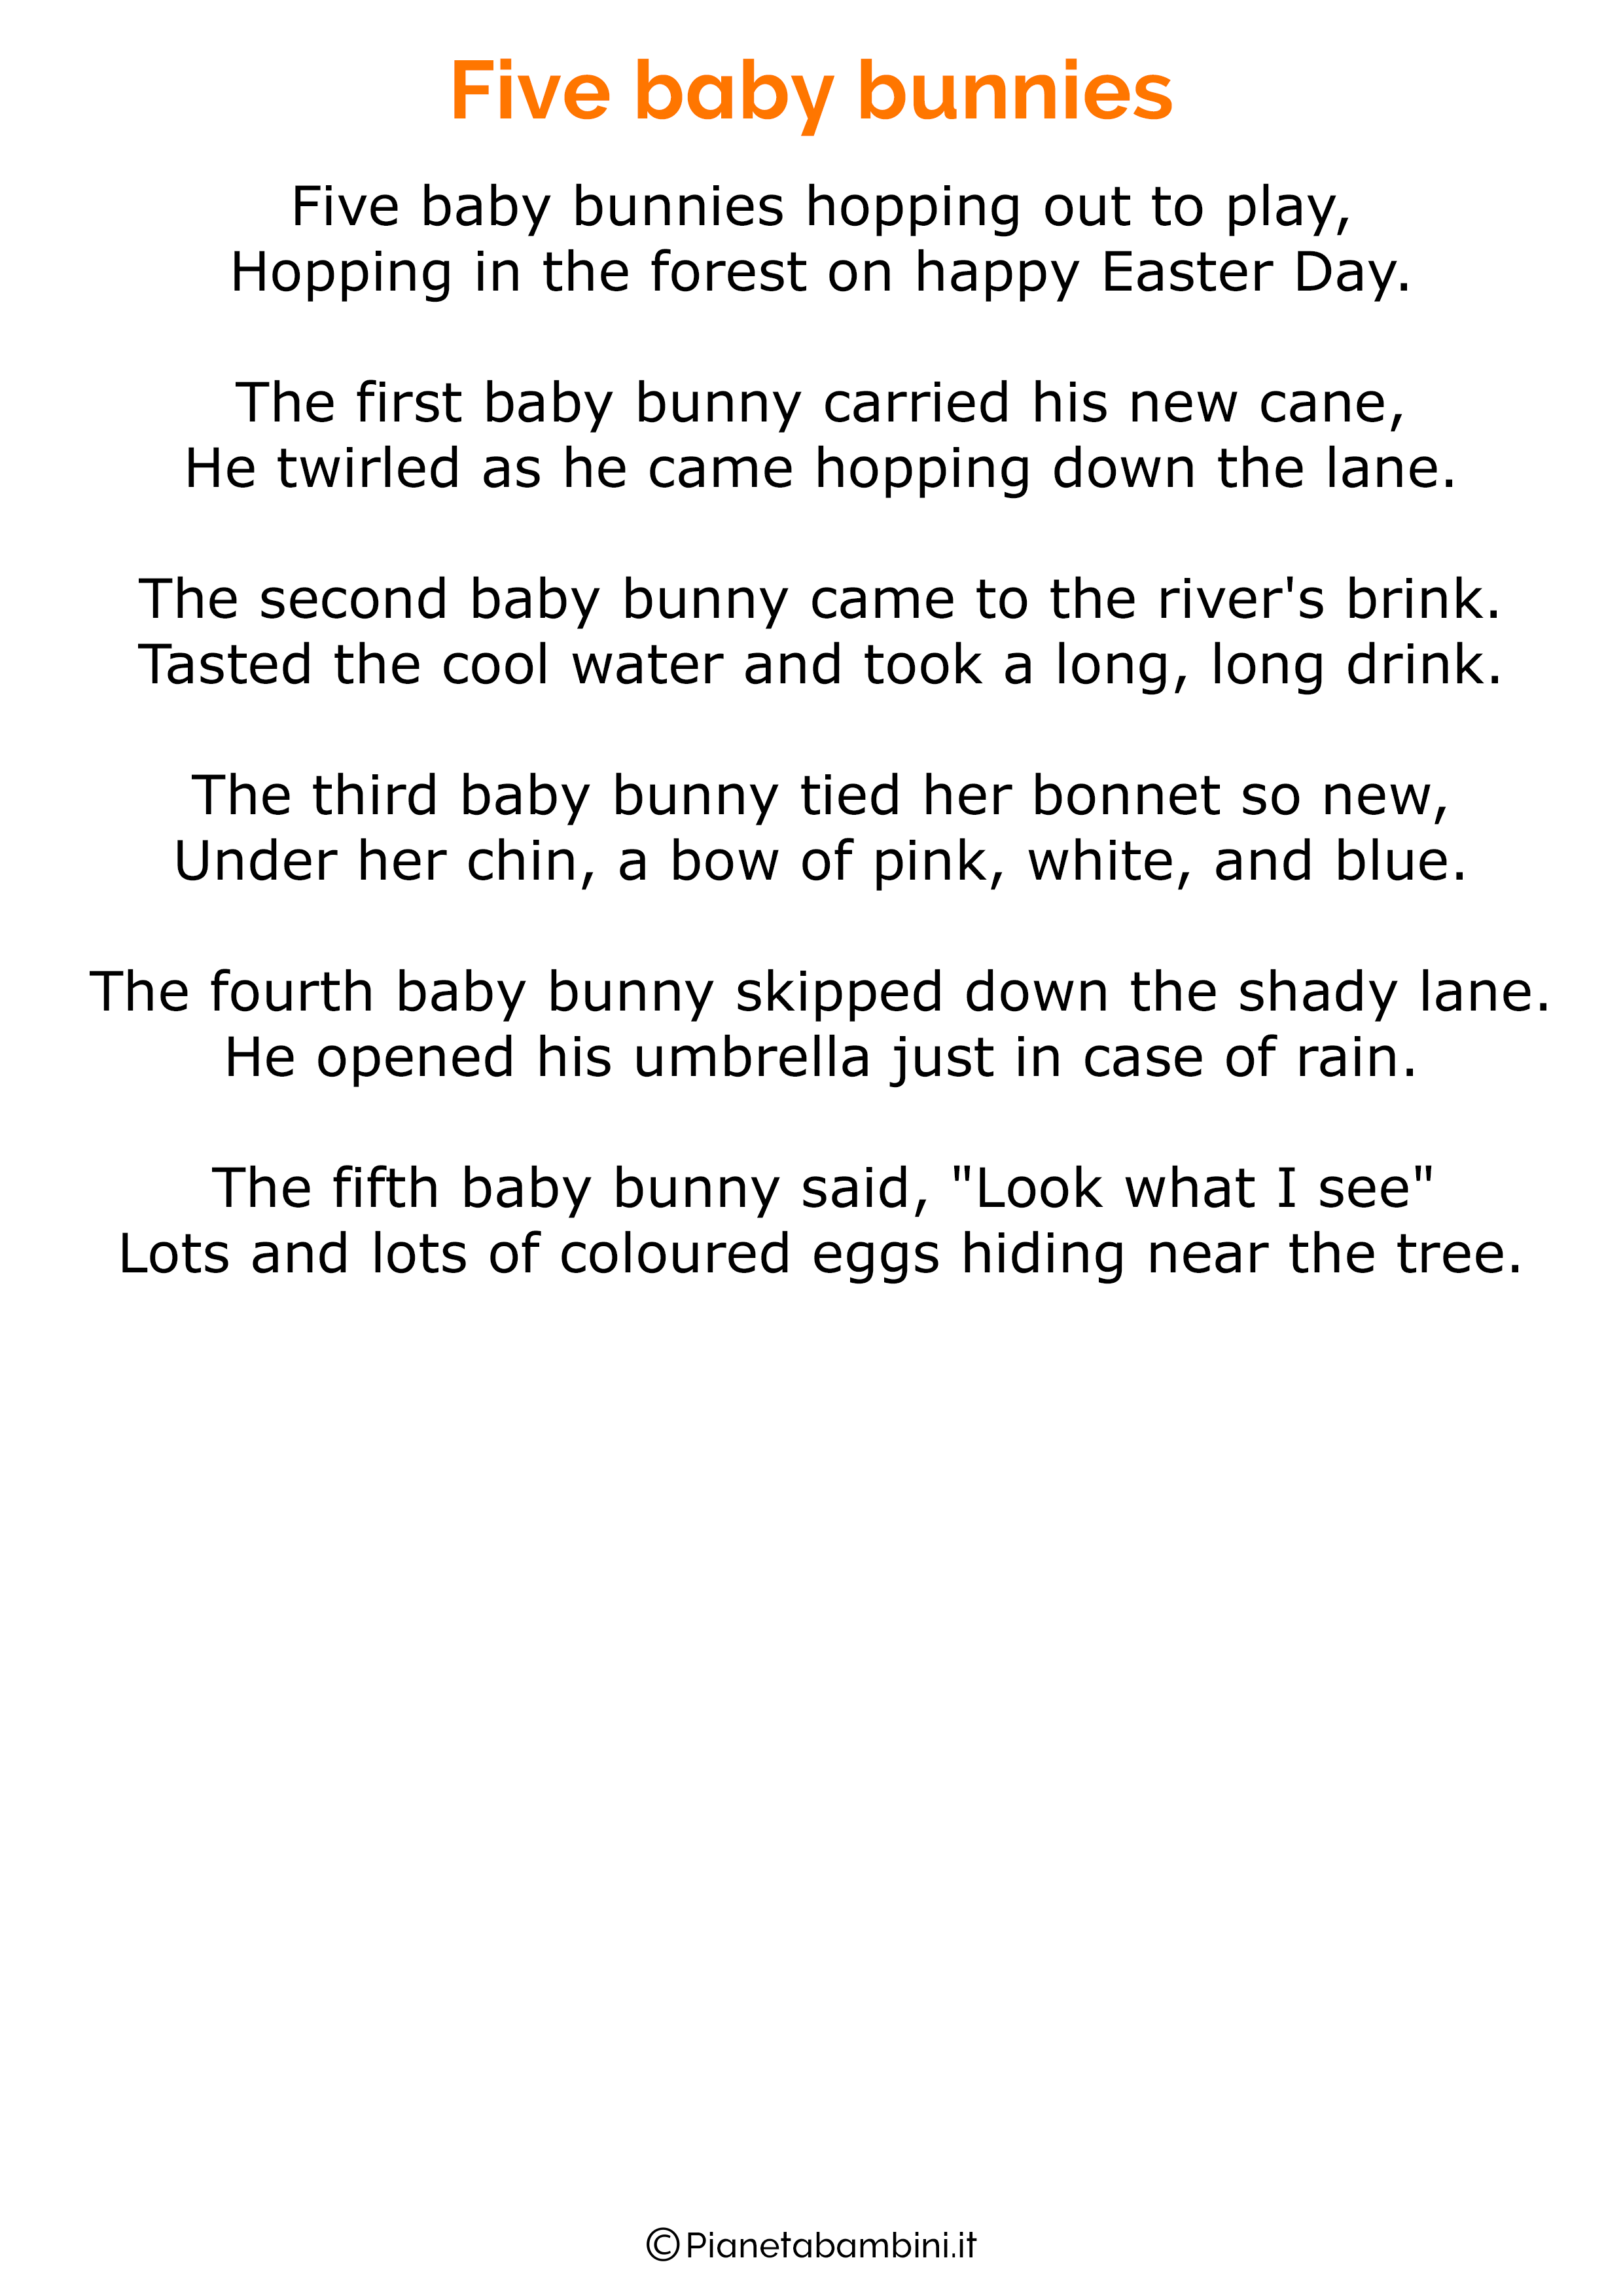 Poesie di Pasqua in inglese per bambini 21